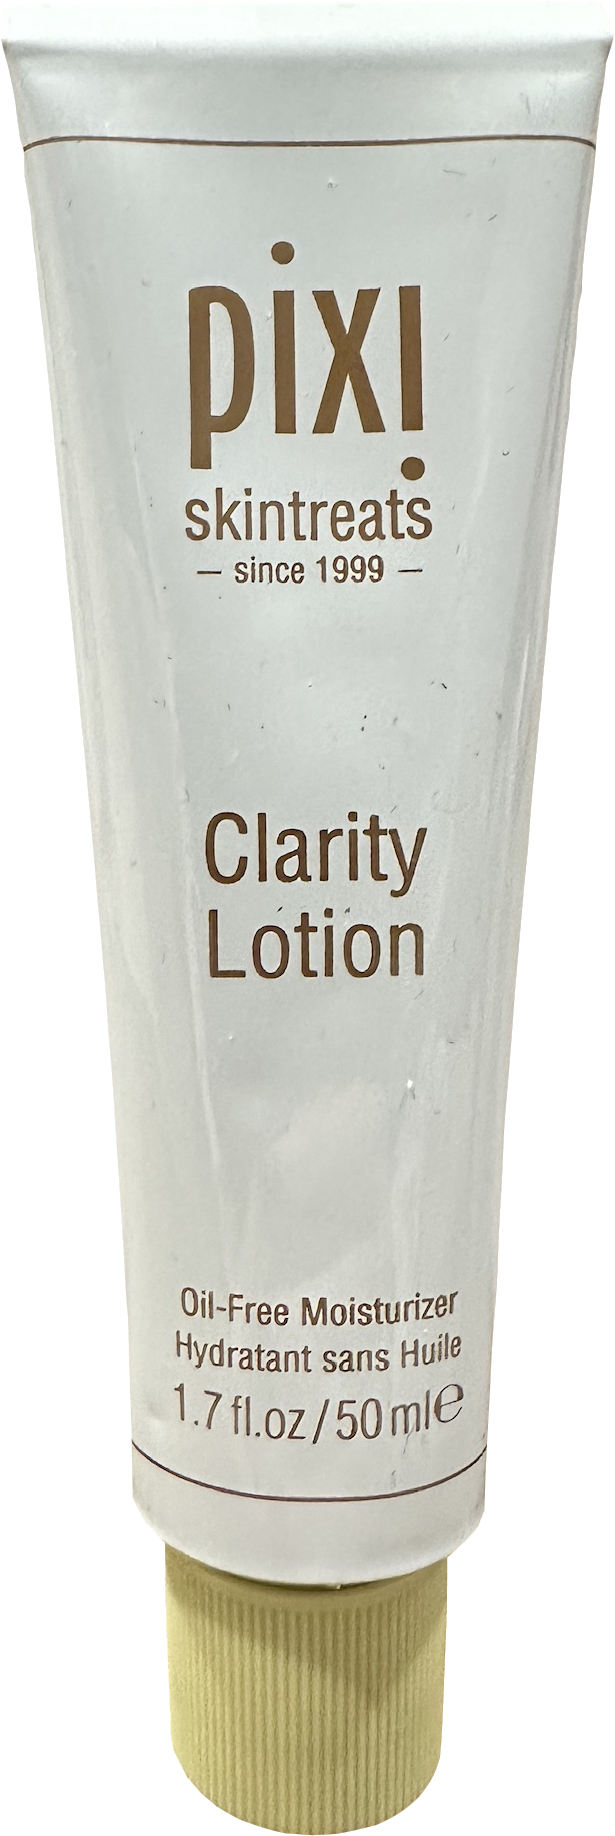 Pixi Clarity Lotion 50ml